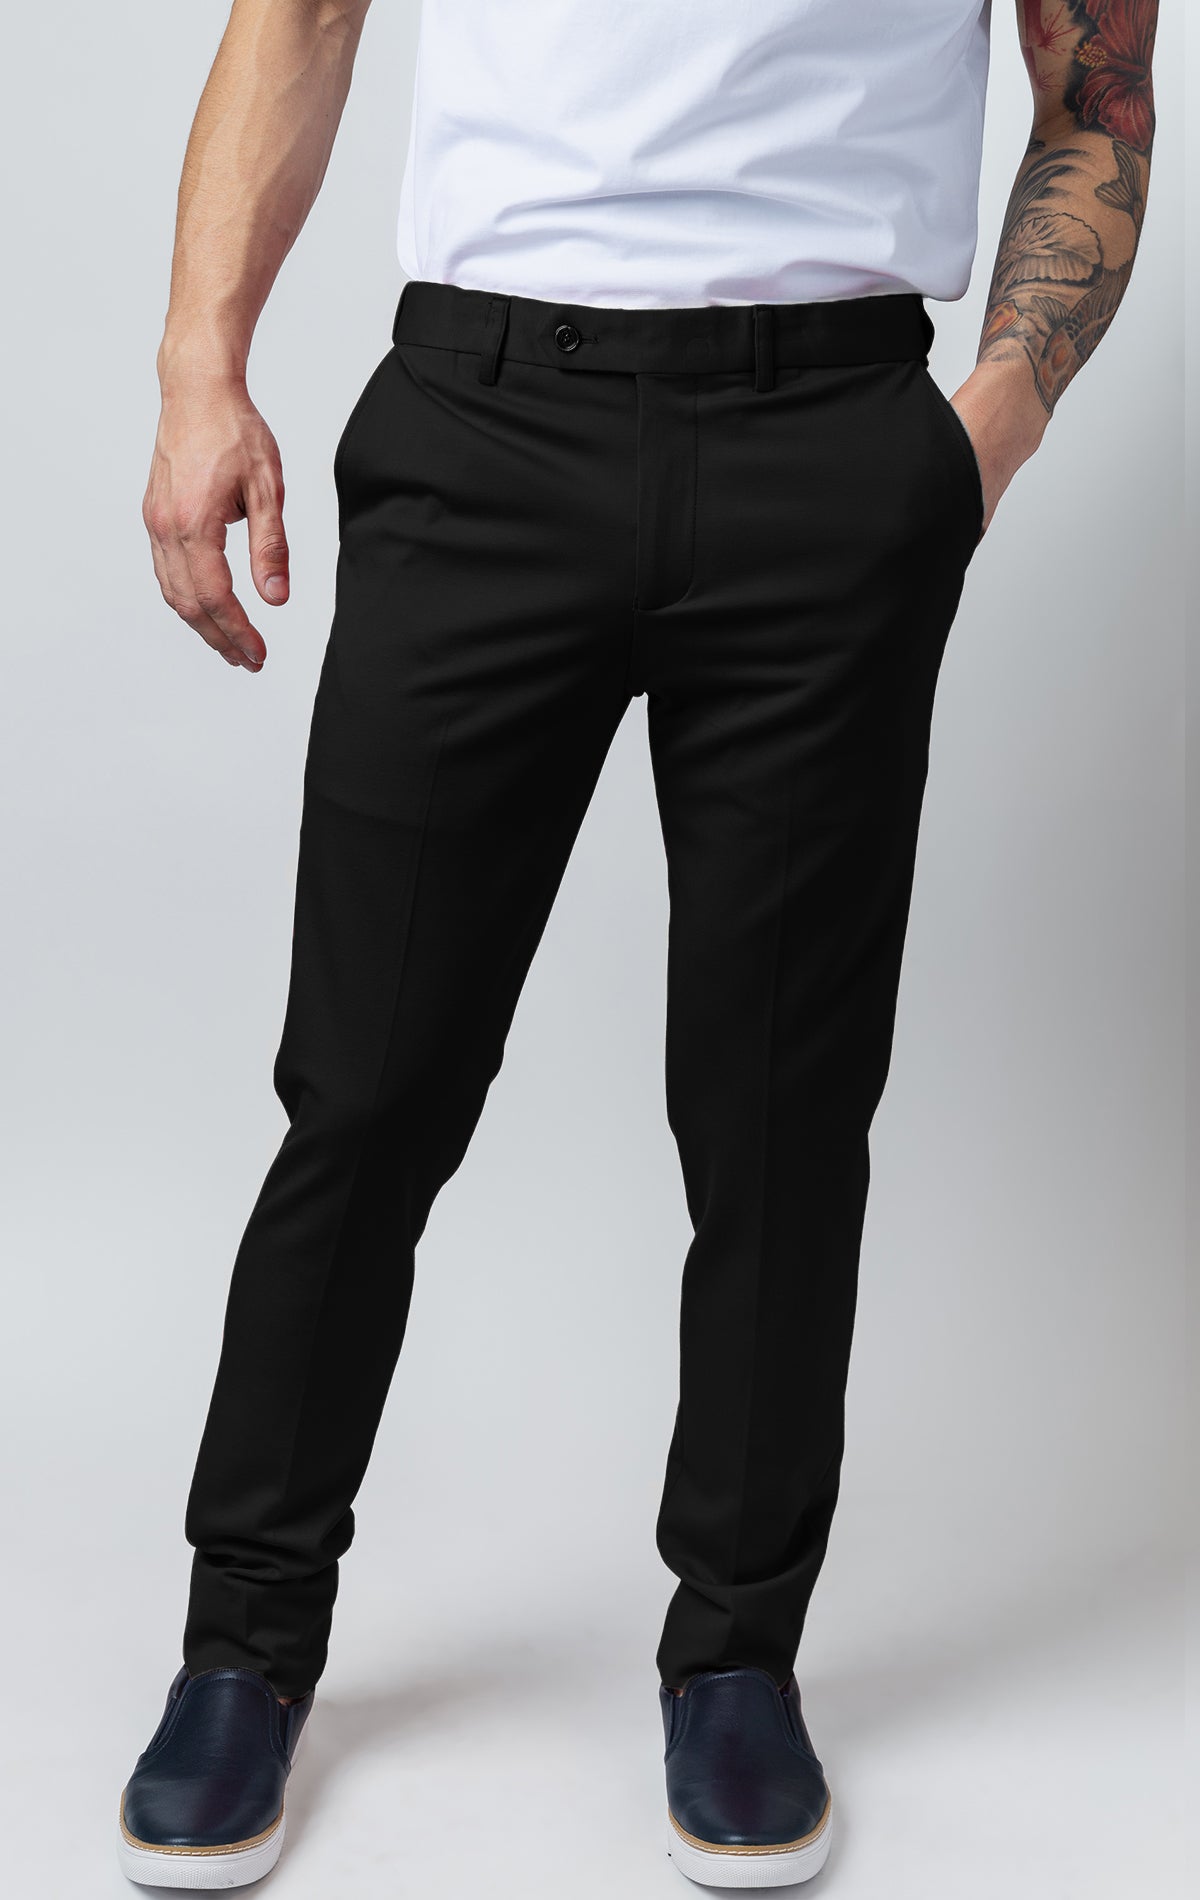 black casual/formal pants for men